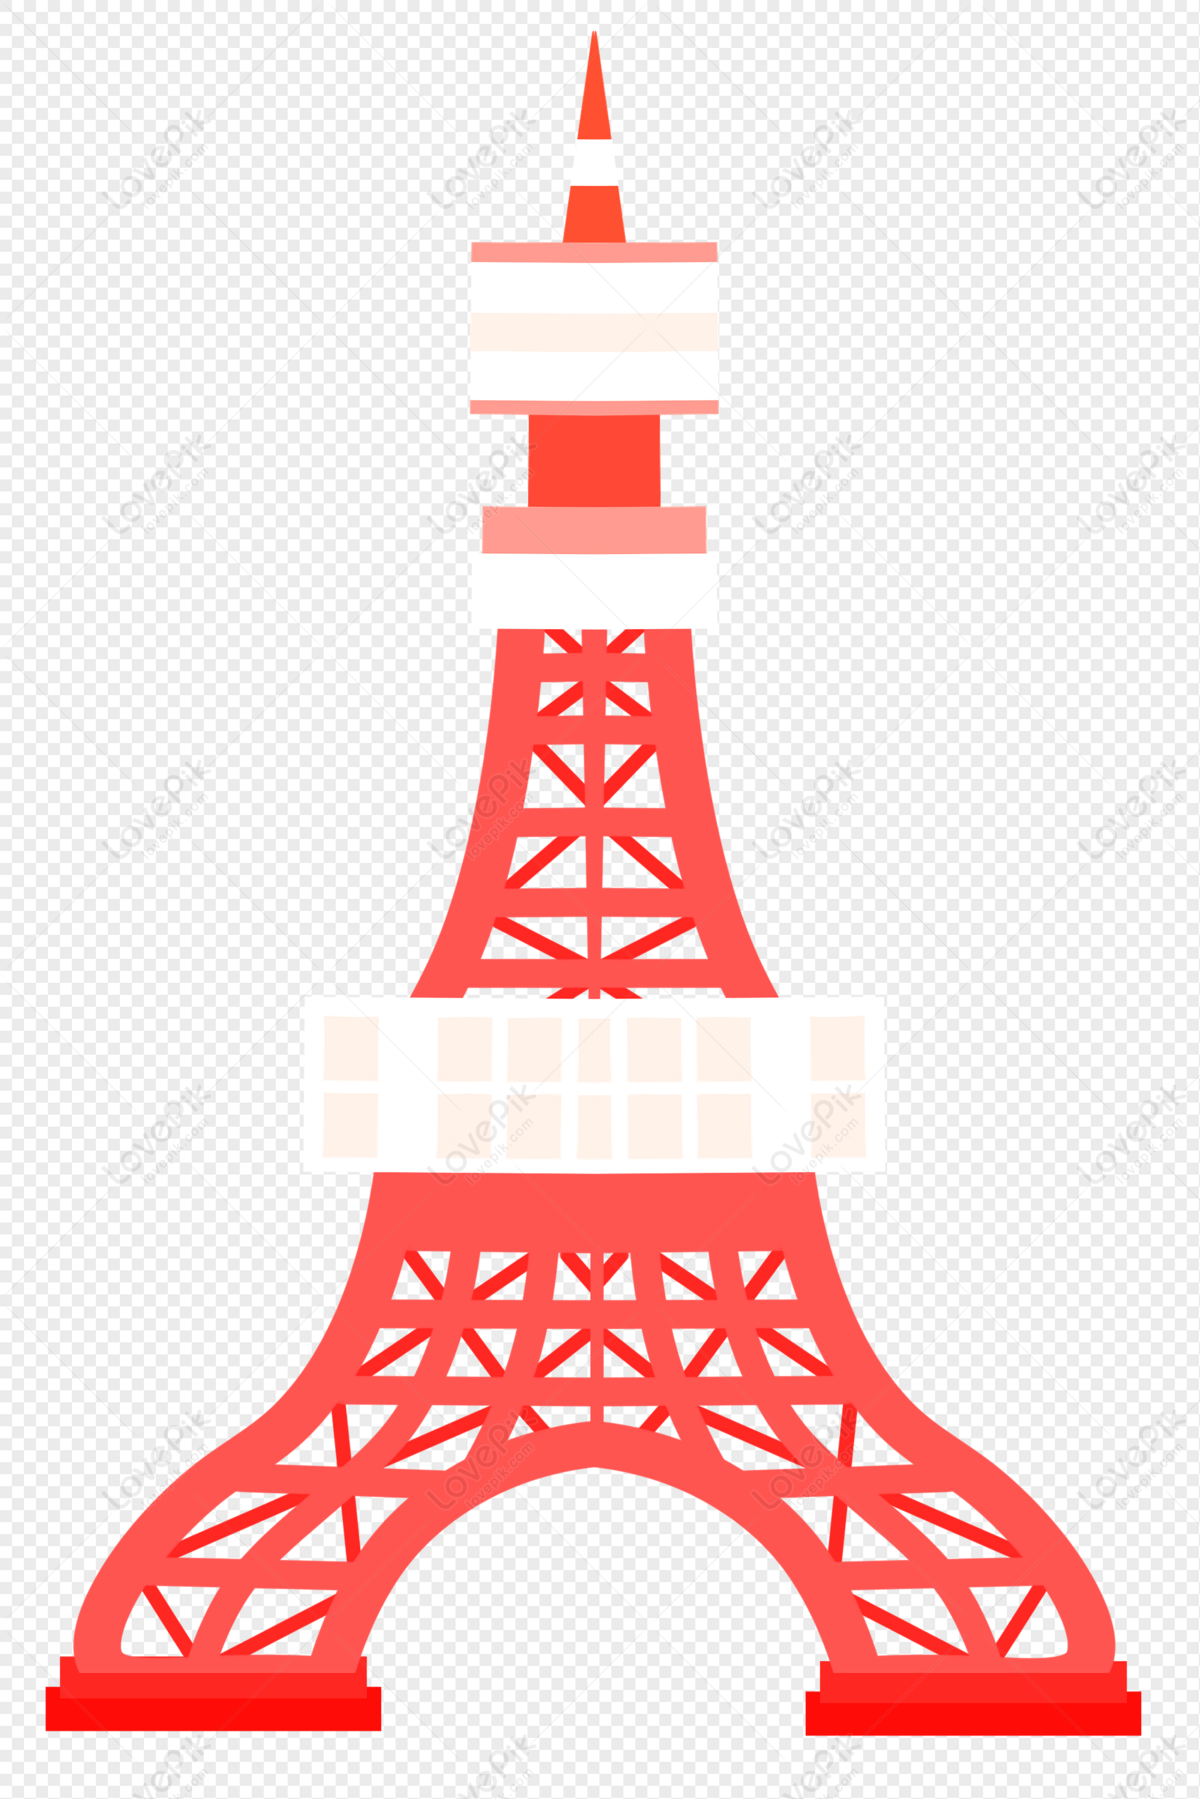 Torre De Paris PNG Imágenes Gratis - Lovepik